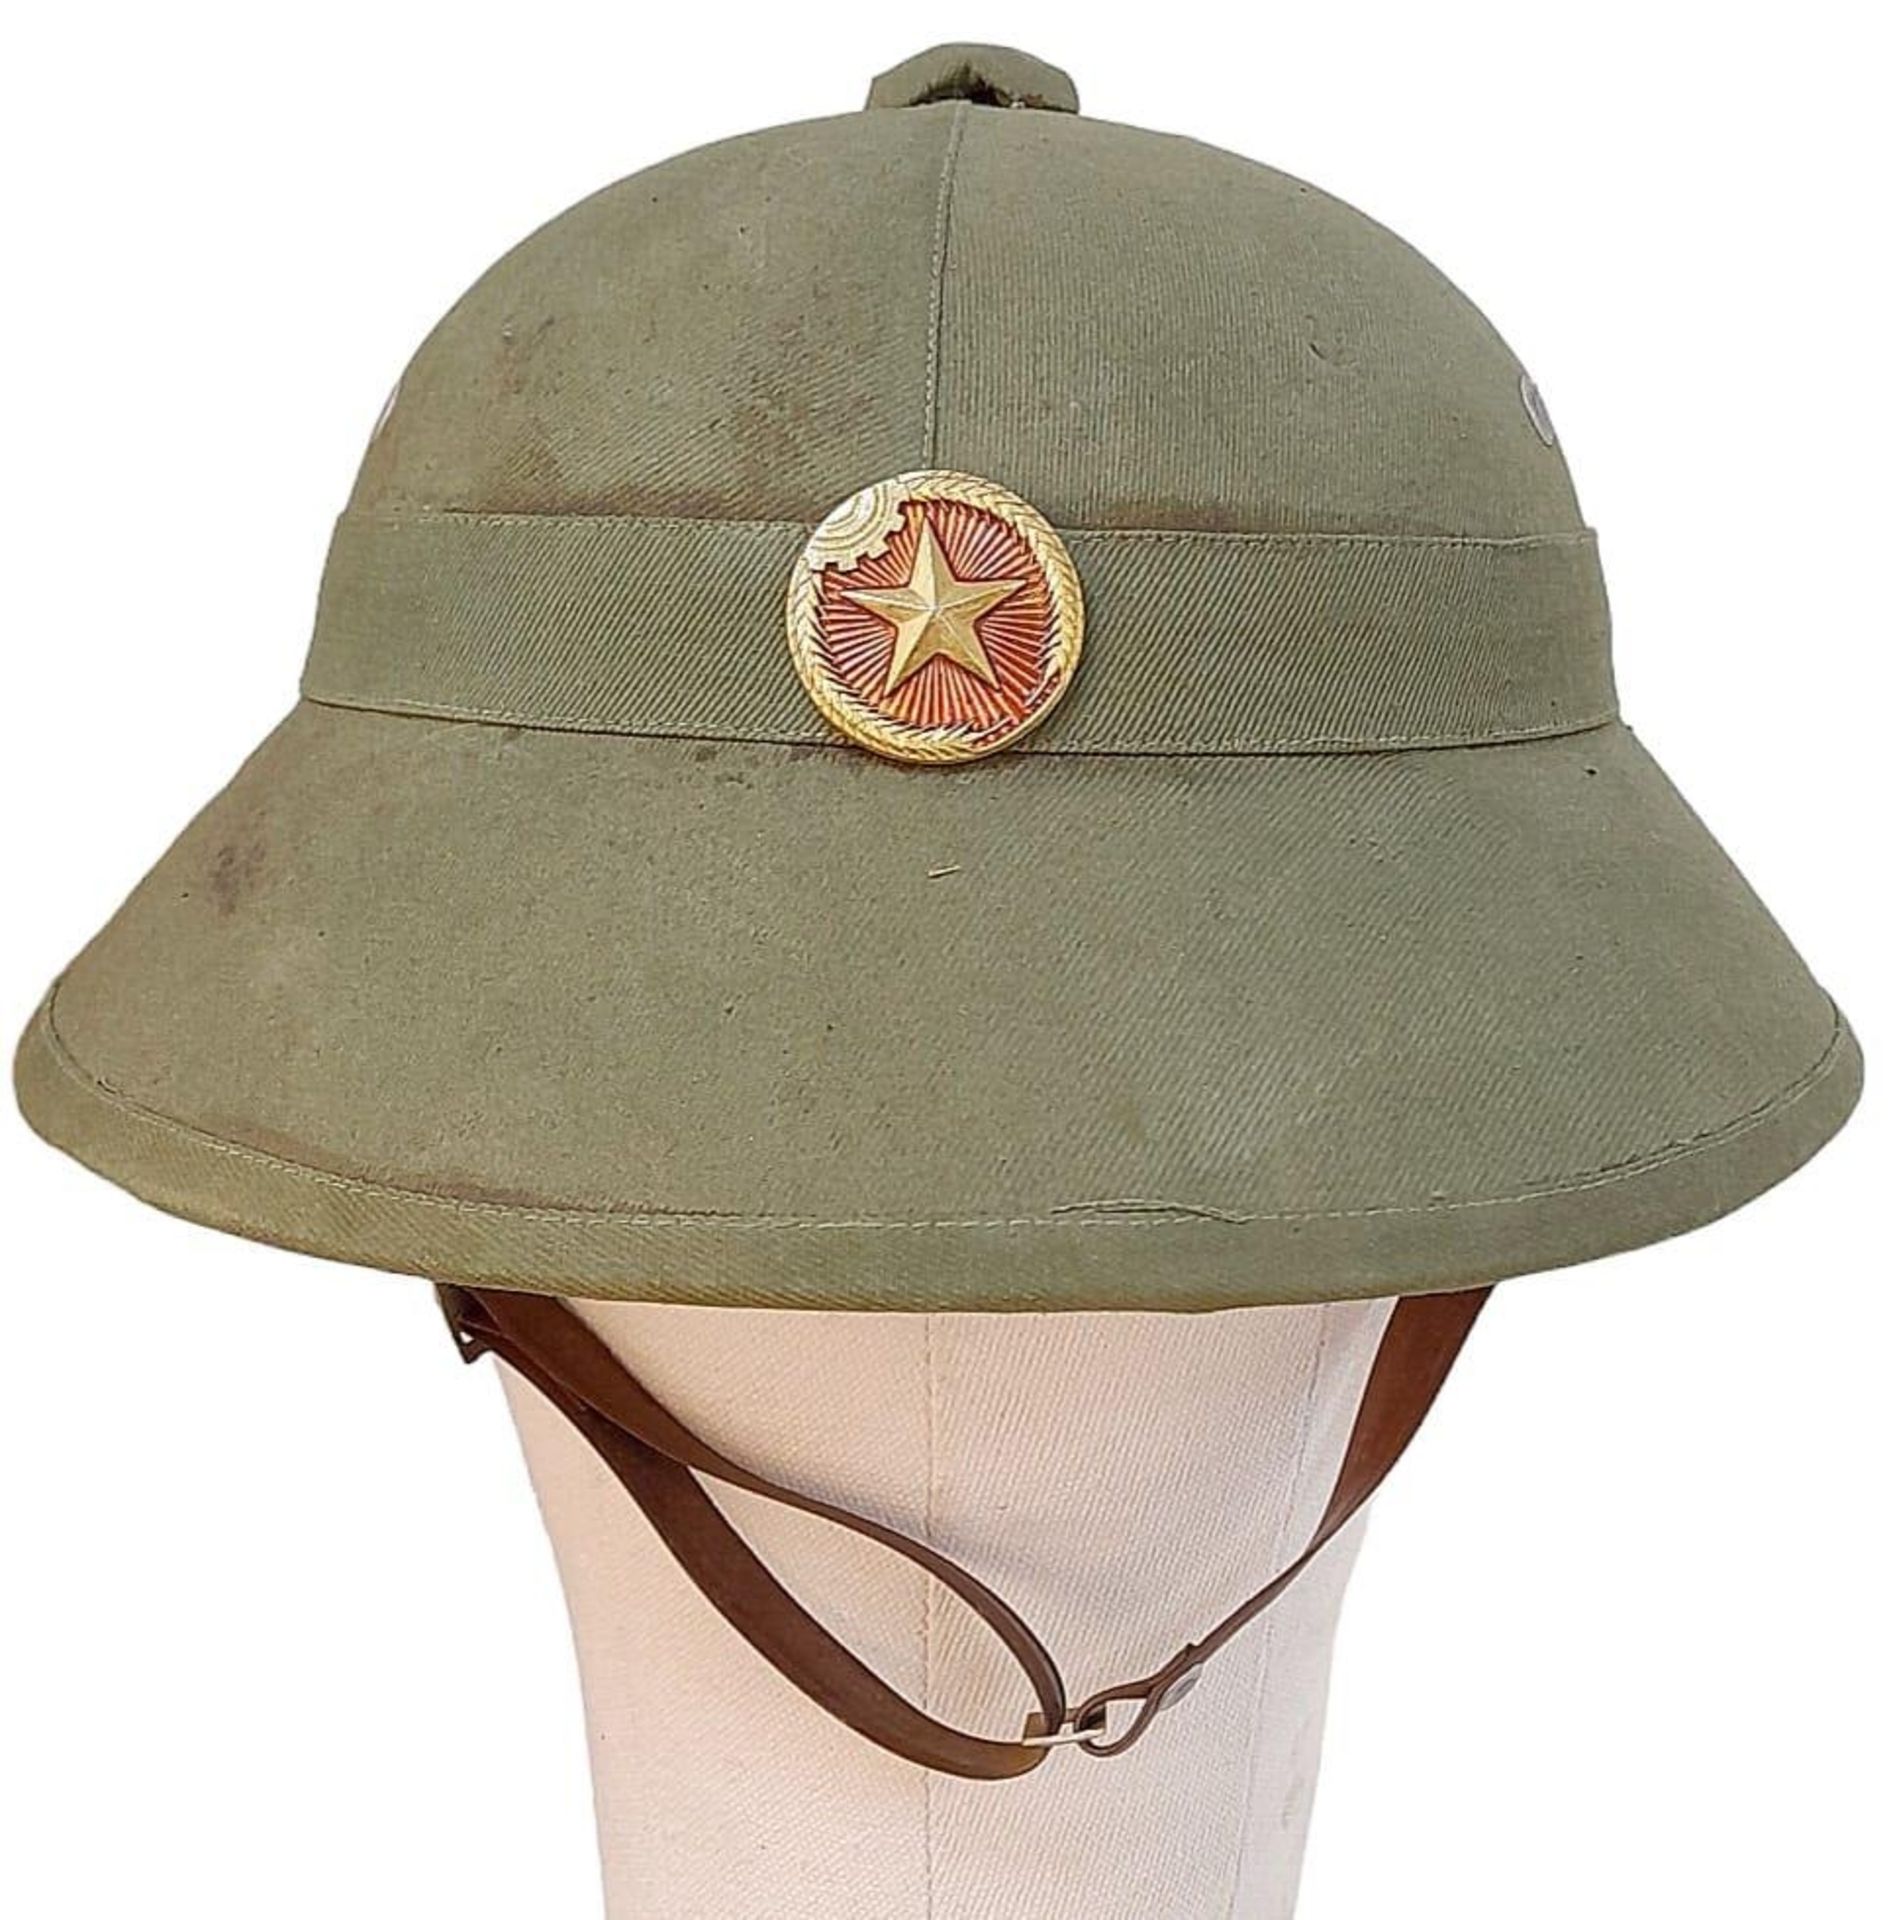 Vietnam War Era North Vietnamese Army (NVA) Fiber Helmet.